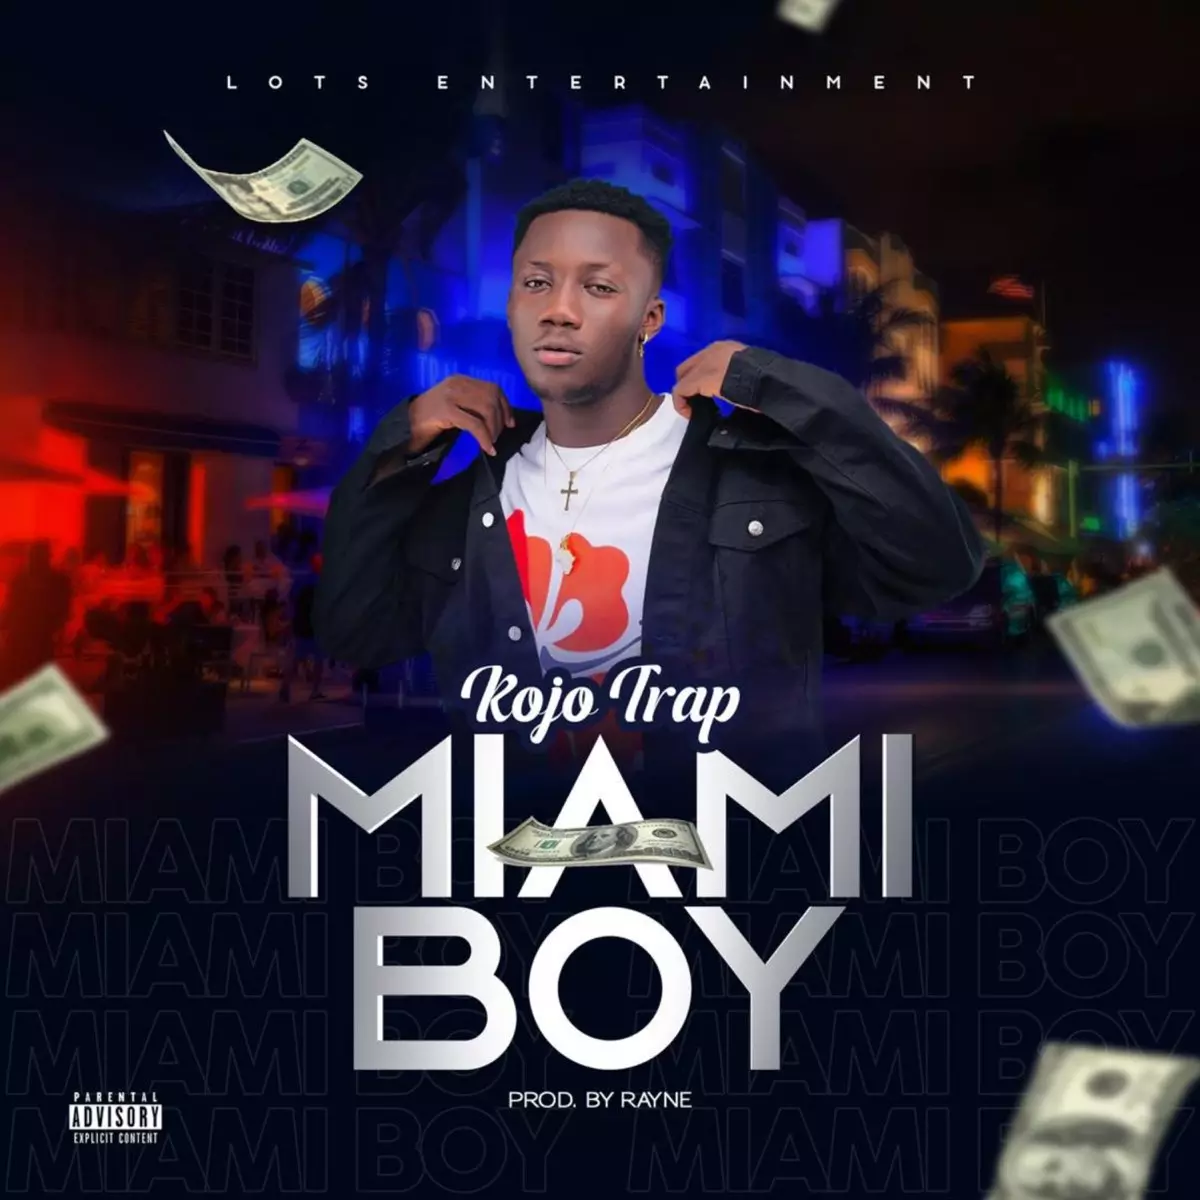 Miami Boy - Single by Kojo Trap on Apple Music